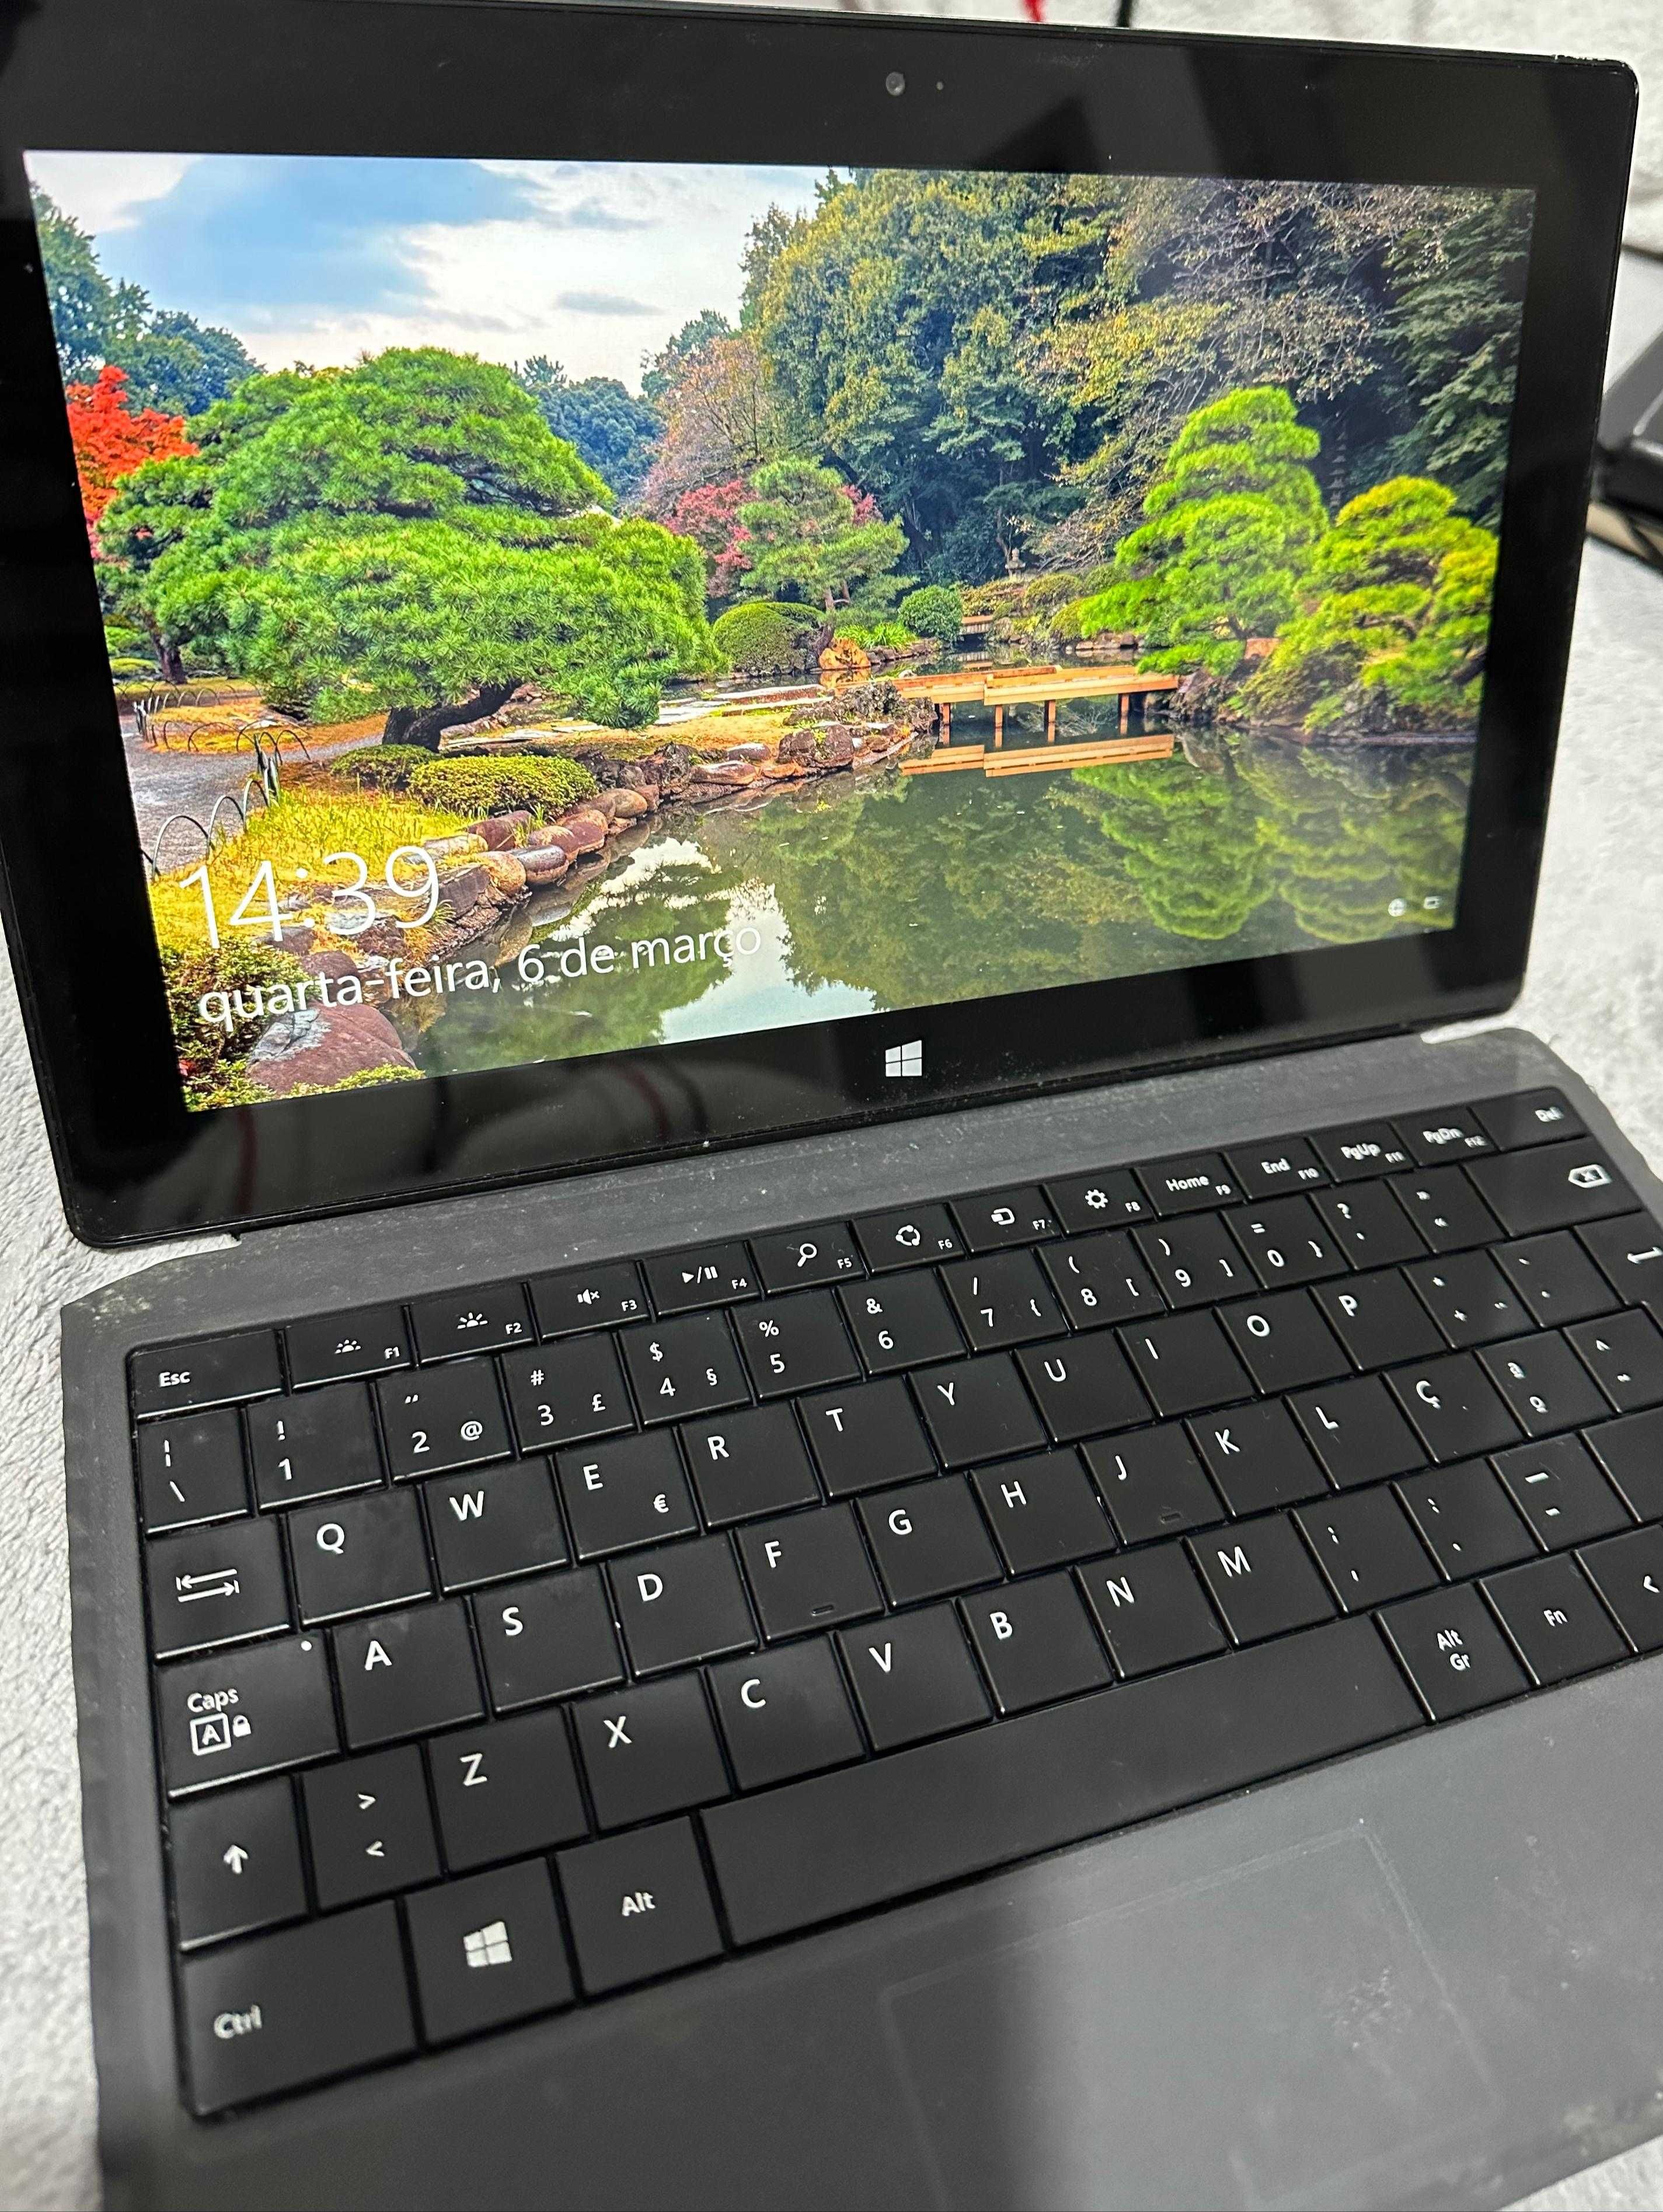 Windows Surface 2 Pro I5 8GB RAM 256GB